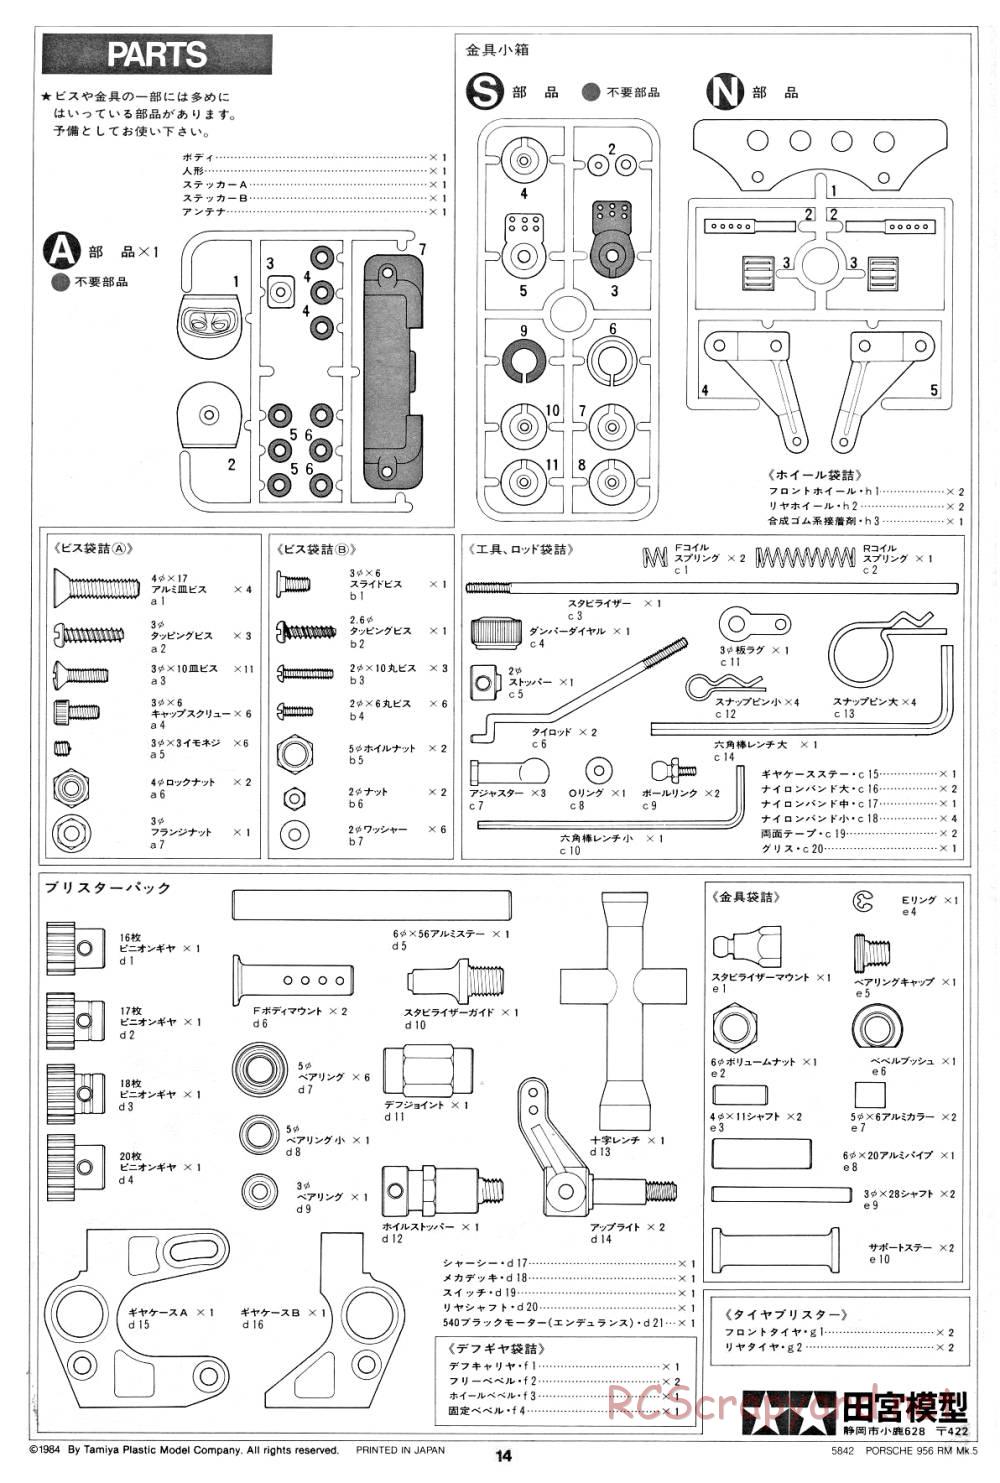 Tamiya - Porsche 956 - RM MK.5 - 58042 - Manual - Page 14